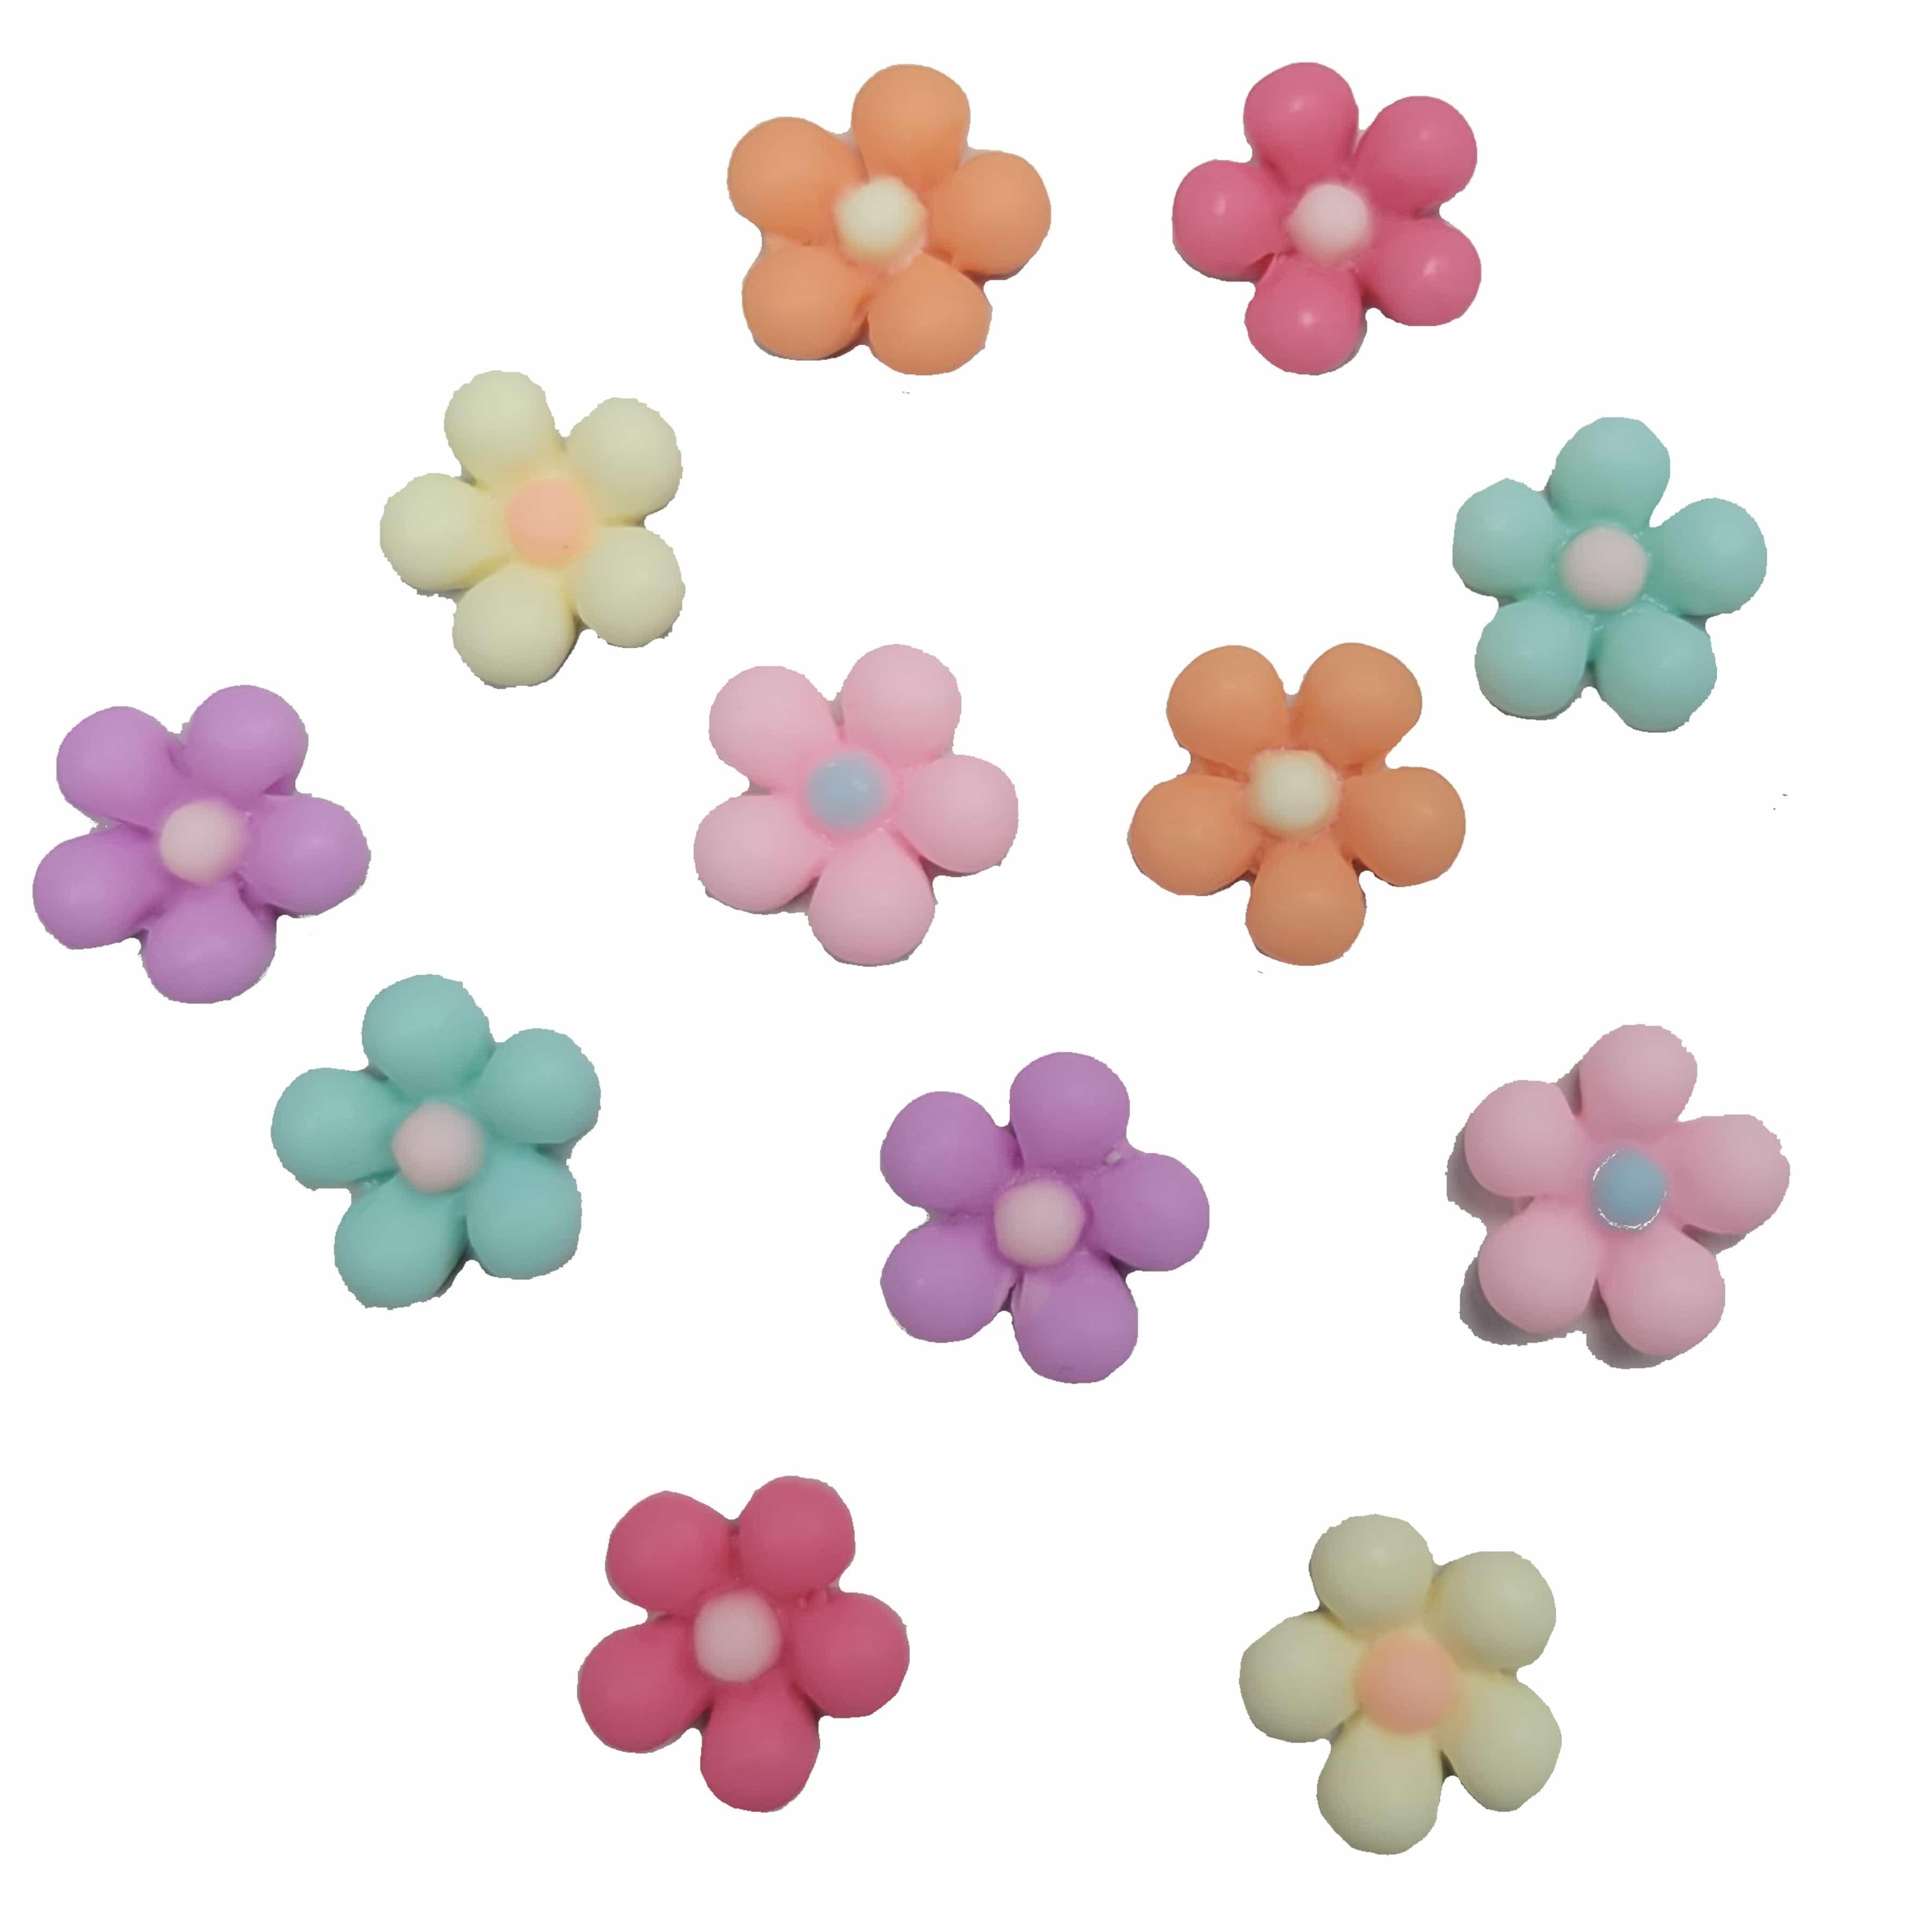 Pastel Flowers .5" Resin Flatback Scrapbook Embellishments by SSC Designs - 12 pieces